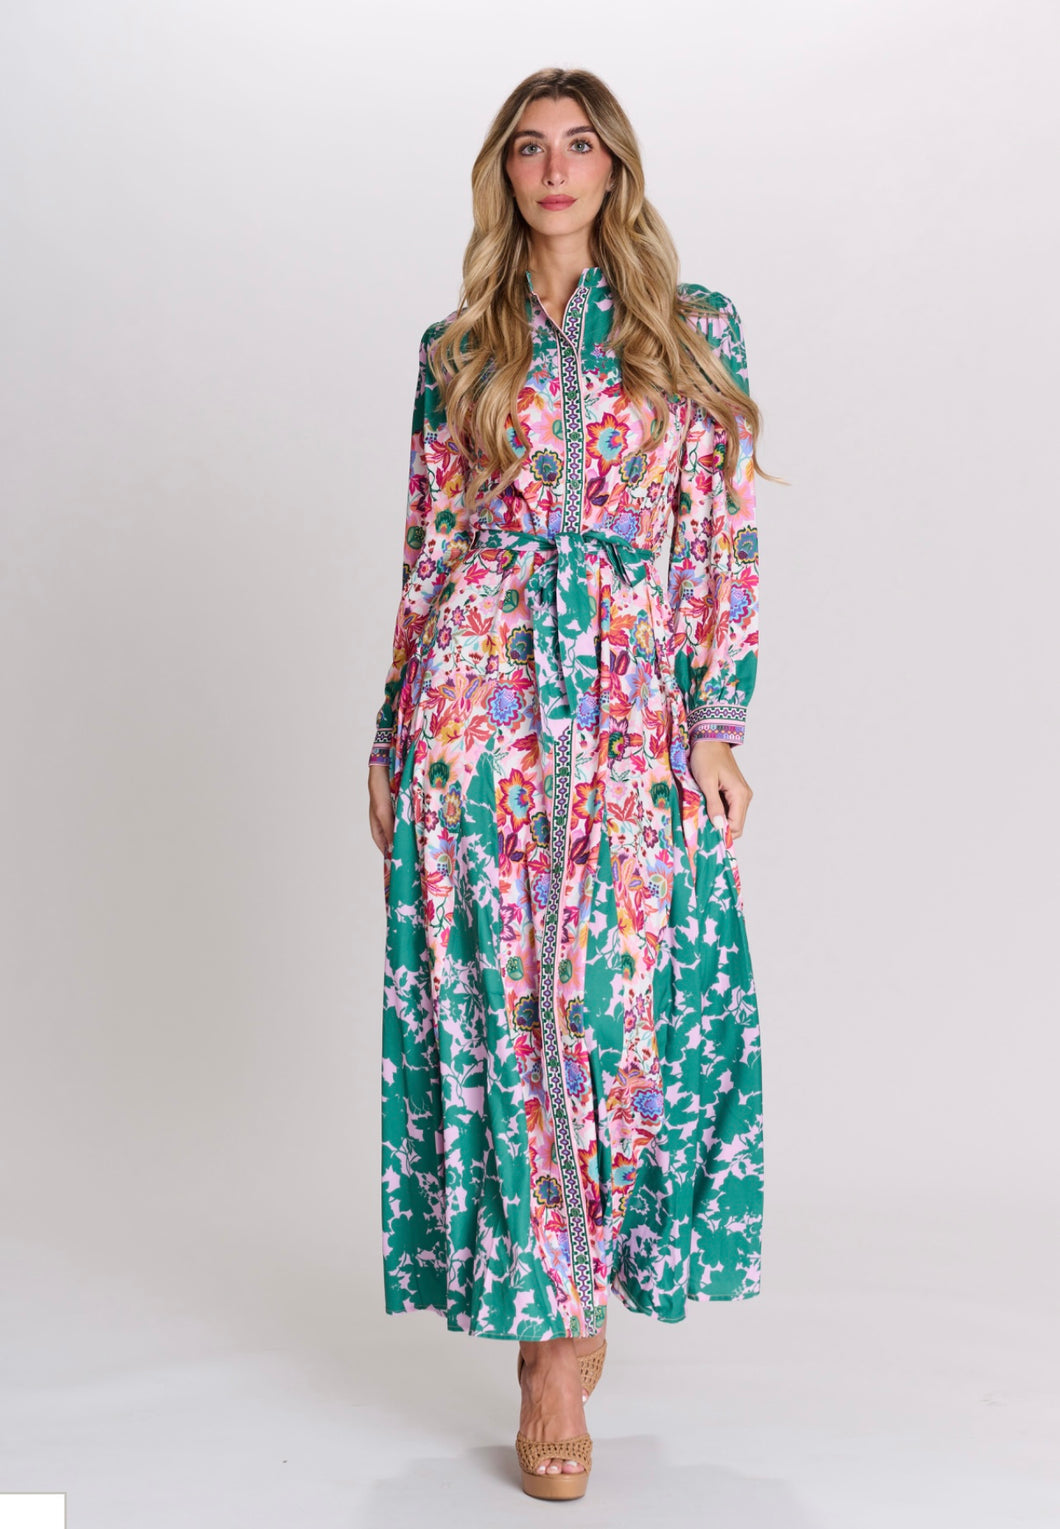 MW Multi Color Printed Dress 332086